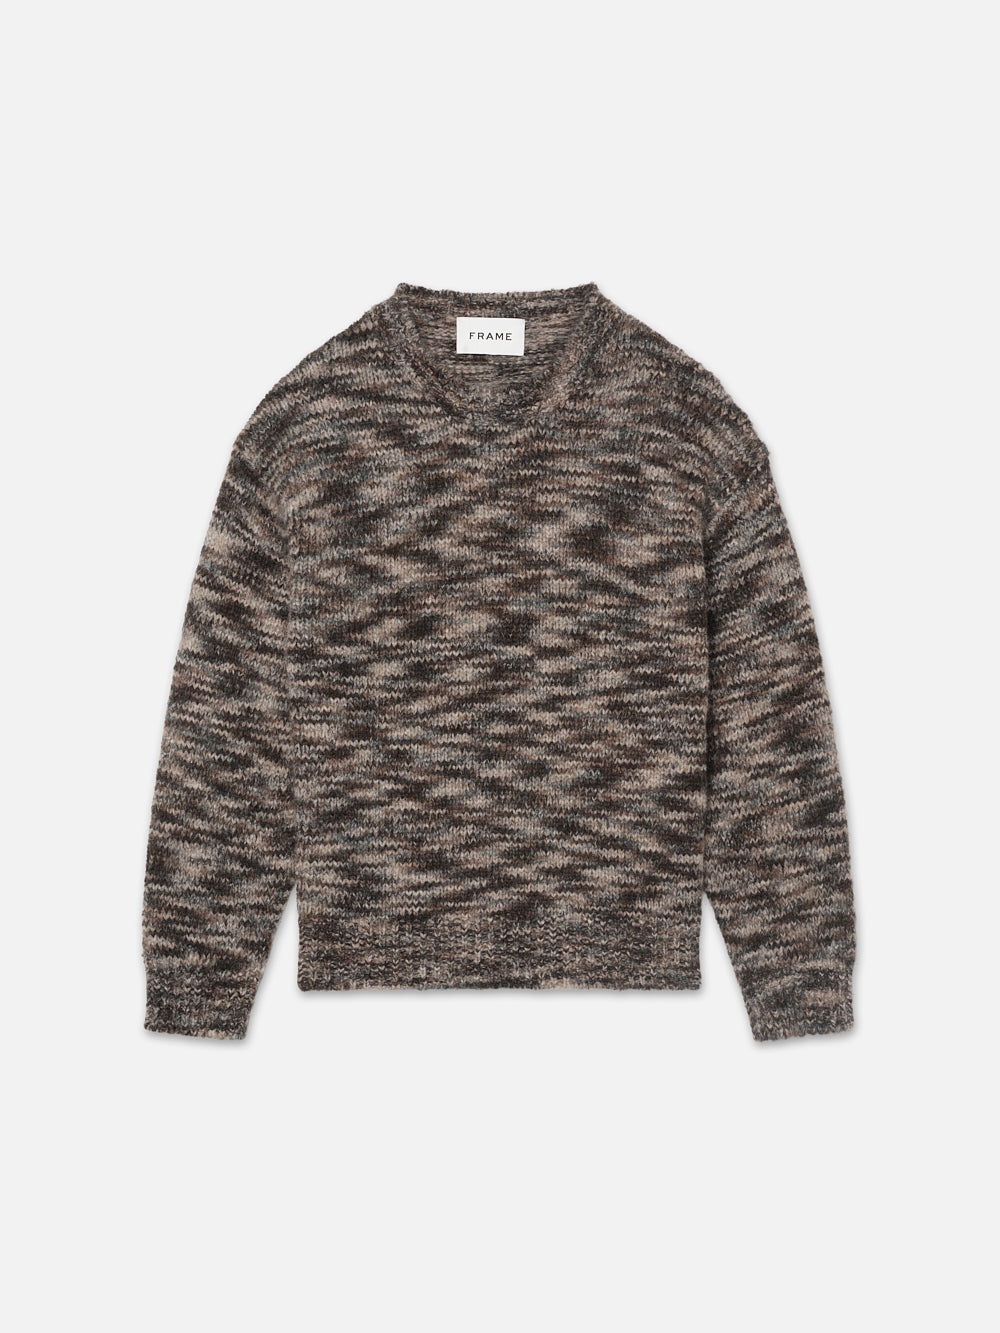 Tweed Textured Crewneck Sweater in Marron Multi - 1